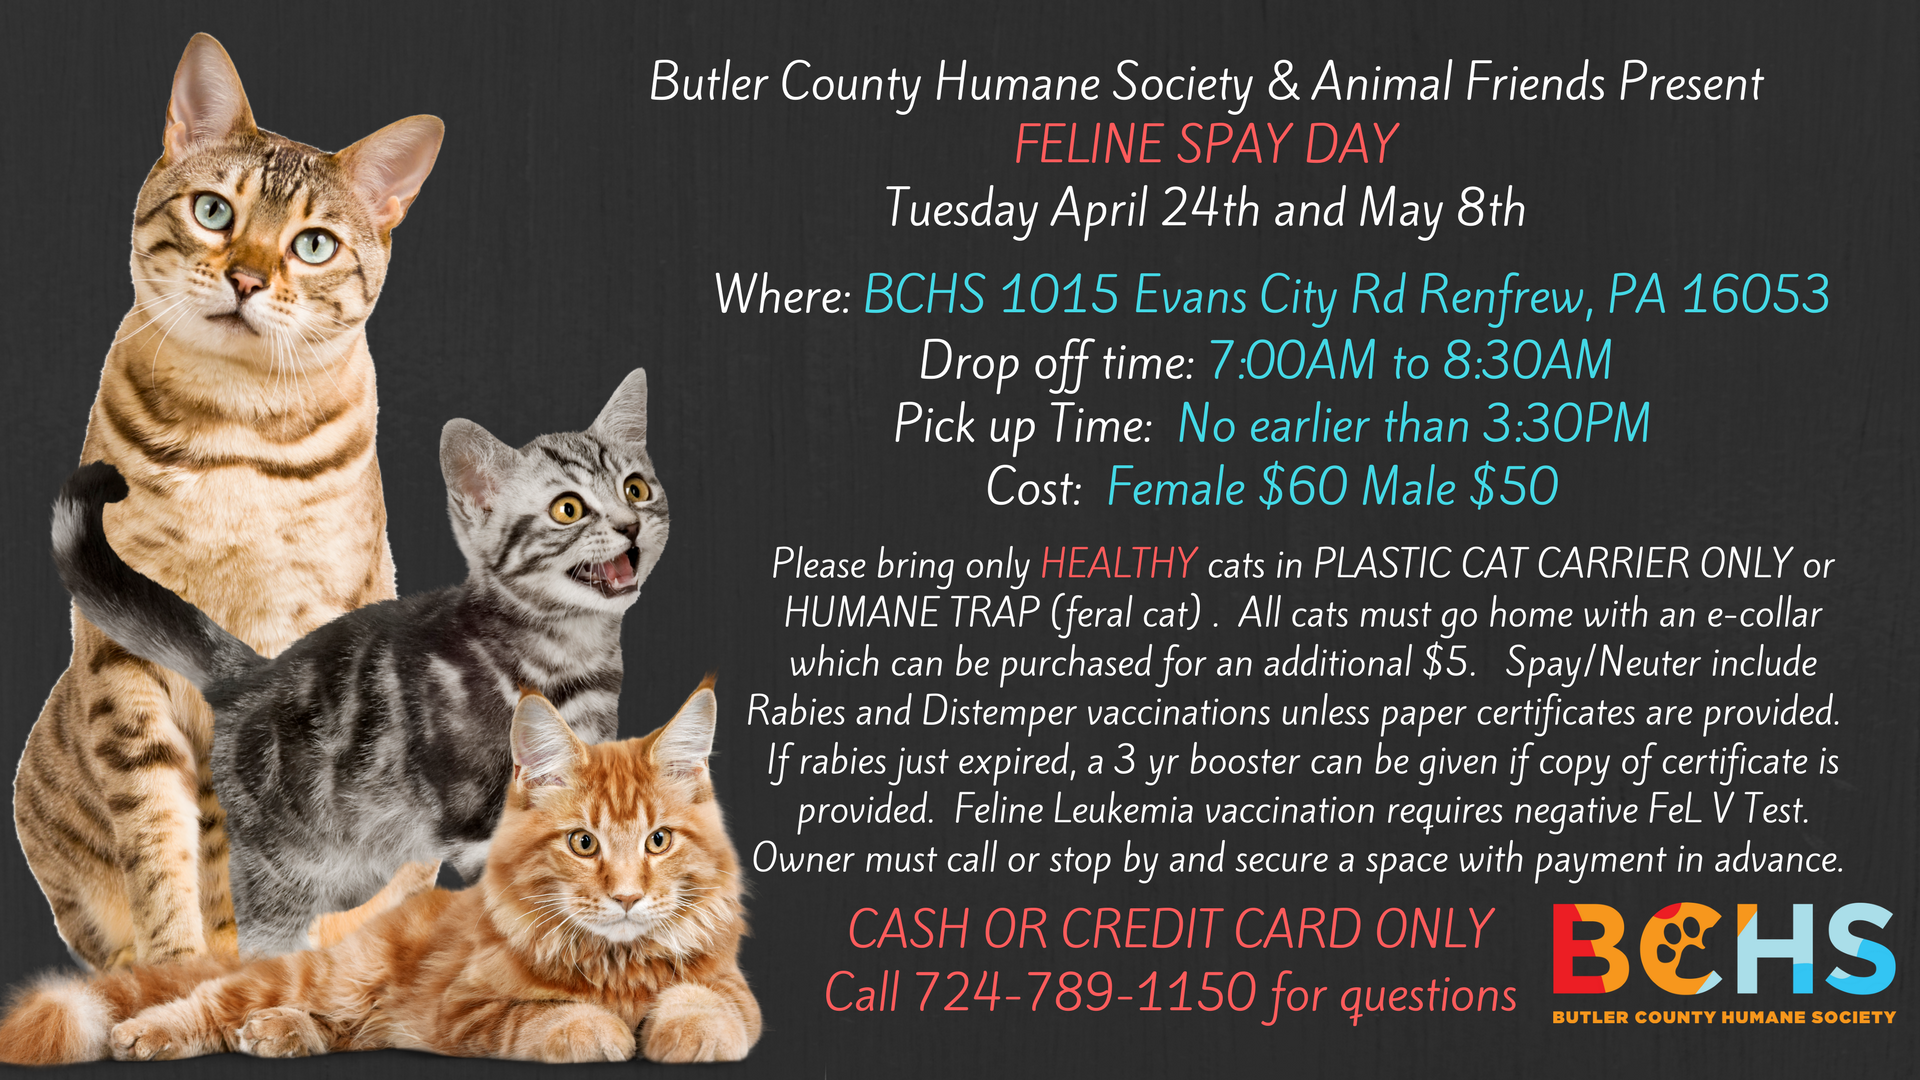 Bchs Animal Friends Feline Spay Day Butler County Humane Society